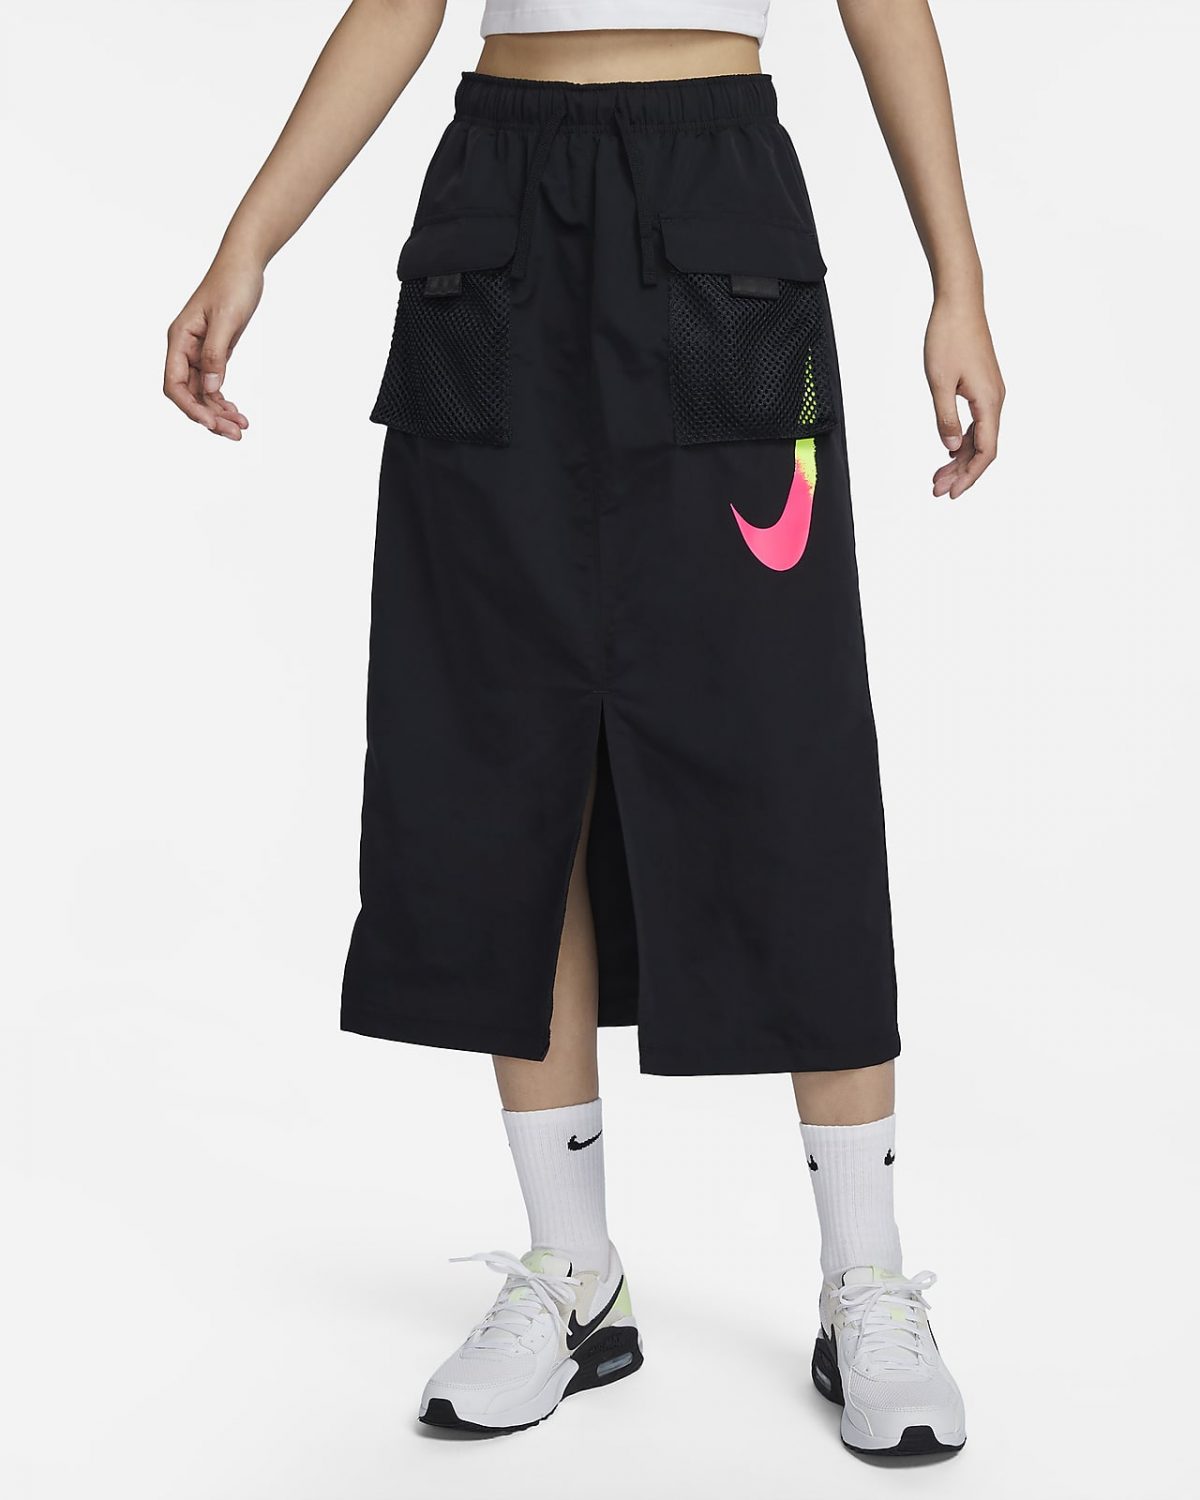 Женская юбка Nike Sportswear фото